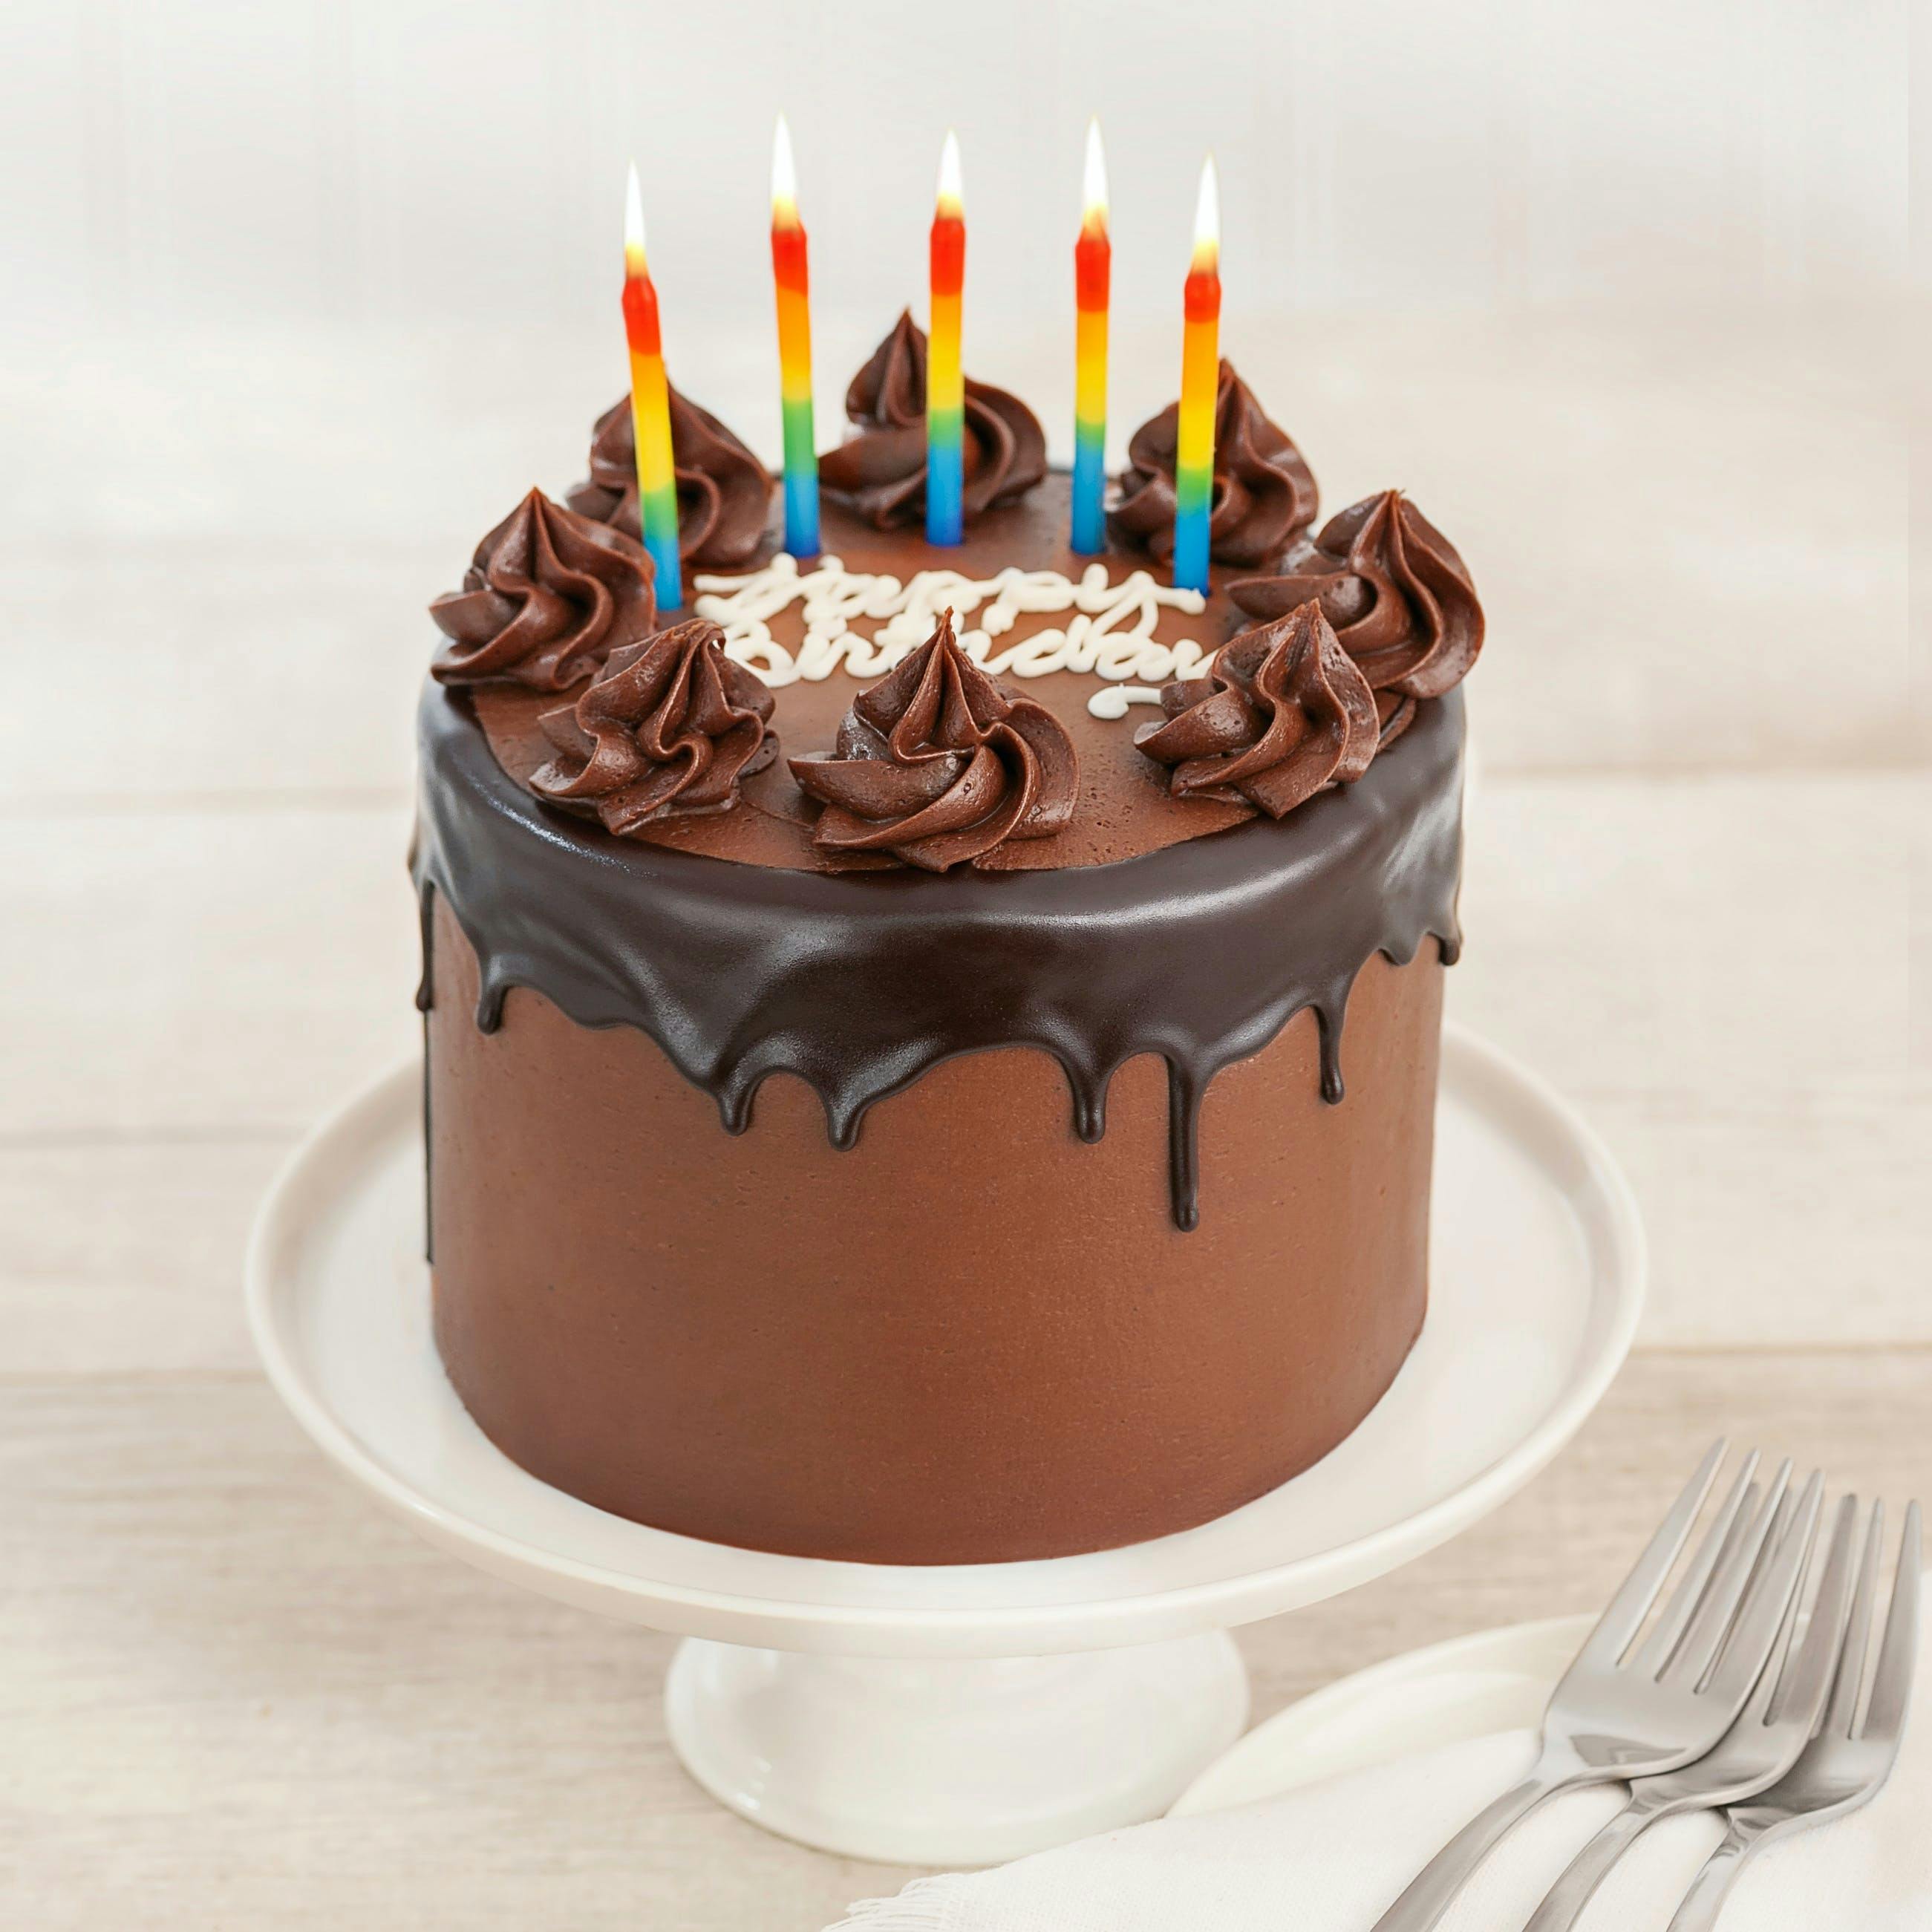 Happy Birthday Chocolate 4-Layer Cake by We Take the Cake - Goldbelly